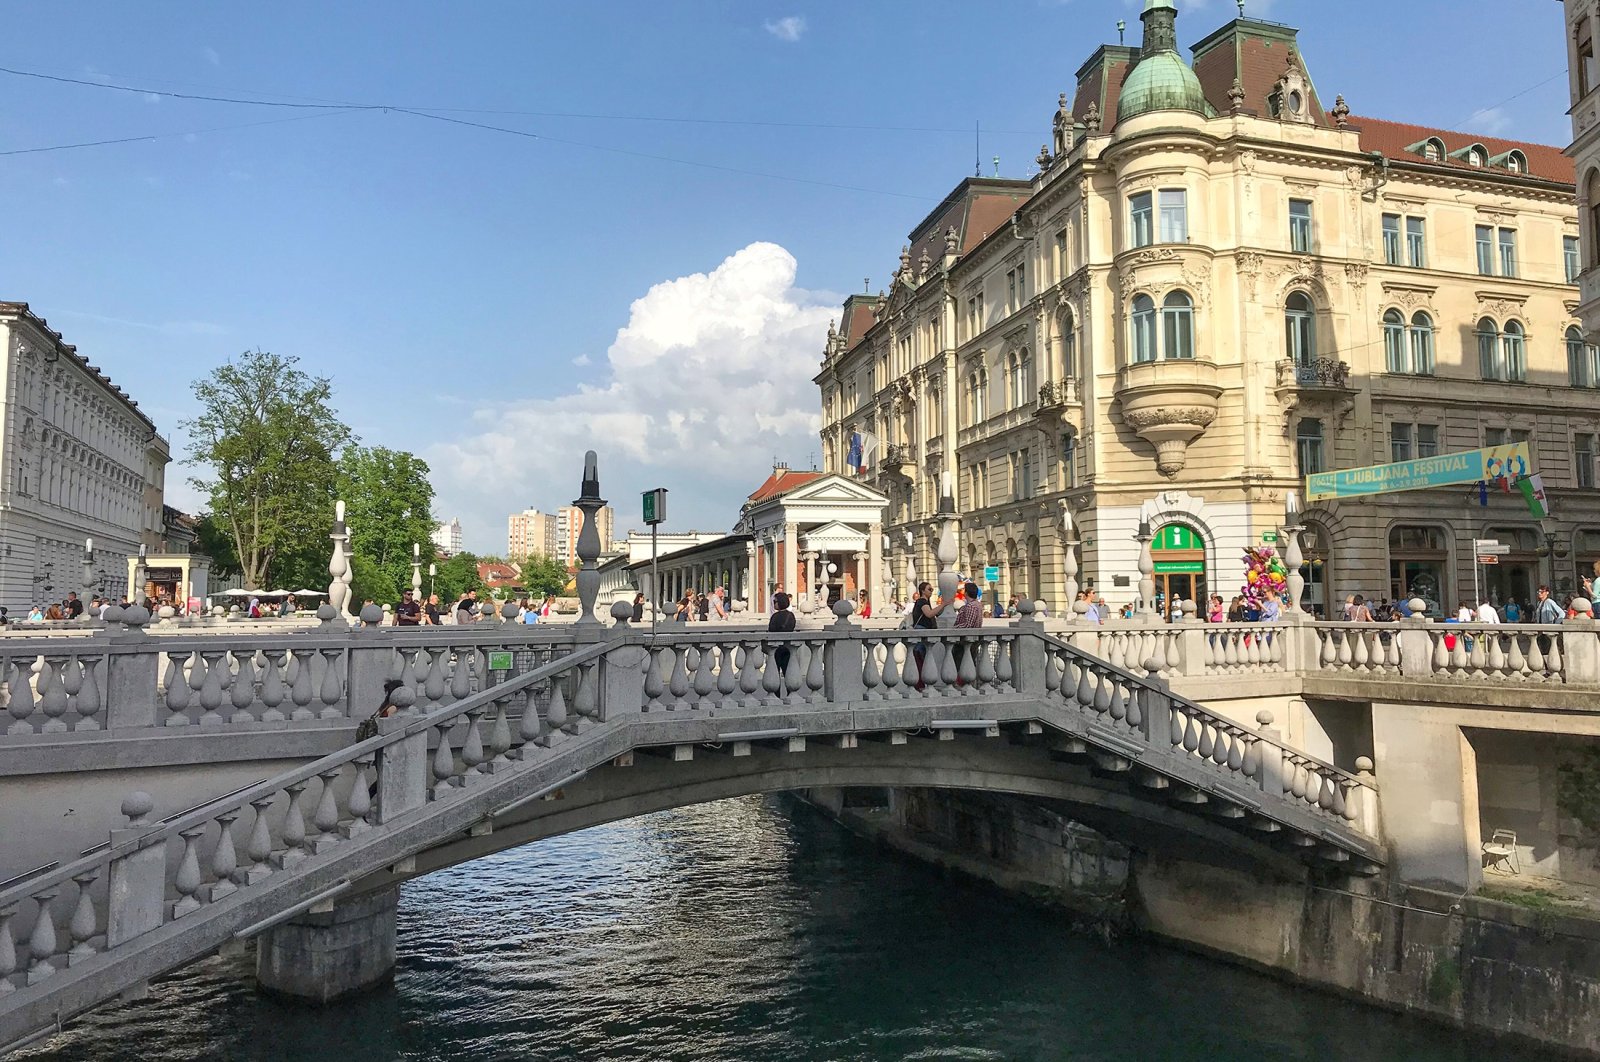 The Triple Bridge, a group of three bridges across the Ljubljanica River, is one of the most important symbols of Ljubljana, Slovenia. (Photo by Özge Şengelen)